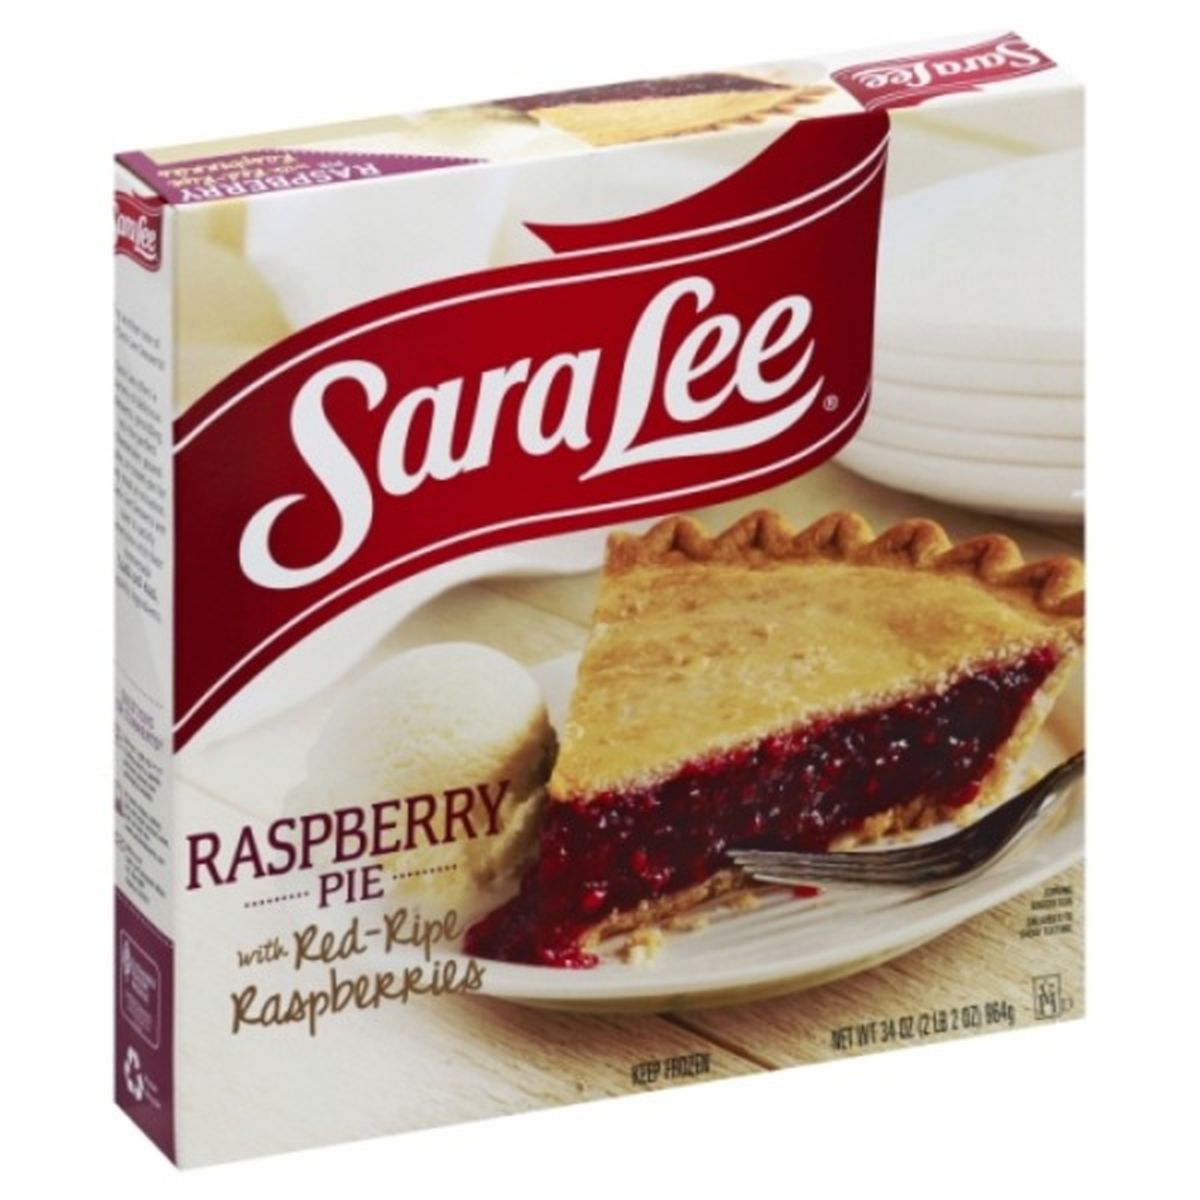 Calories in Sara Lee Pie, Raspberry